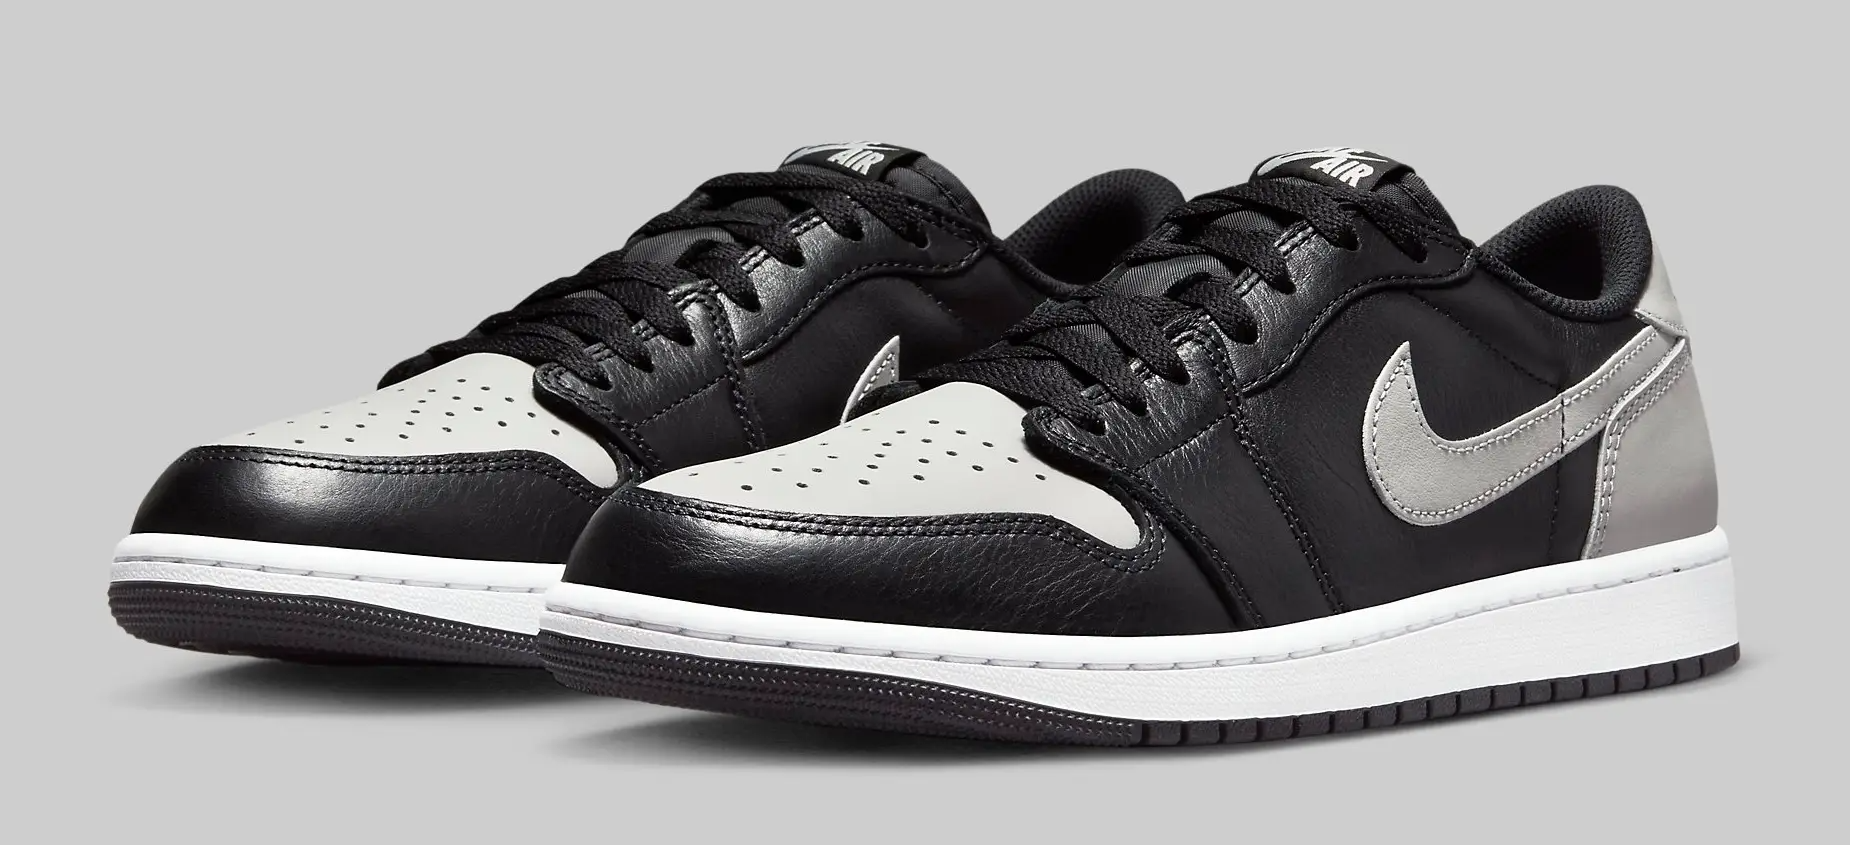 Sneaker Release Guide: 'Shadow' Air Jordan 1 Low